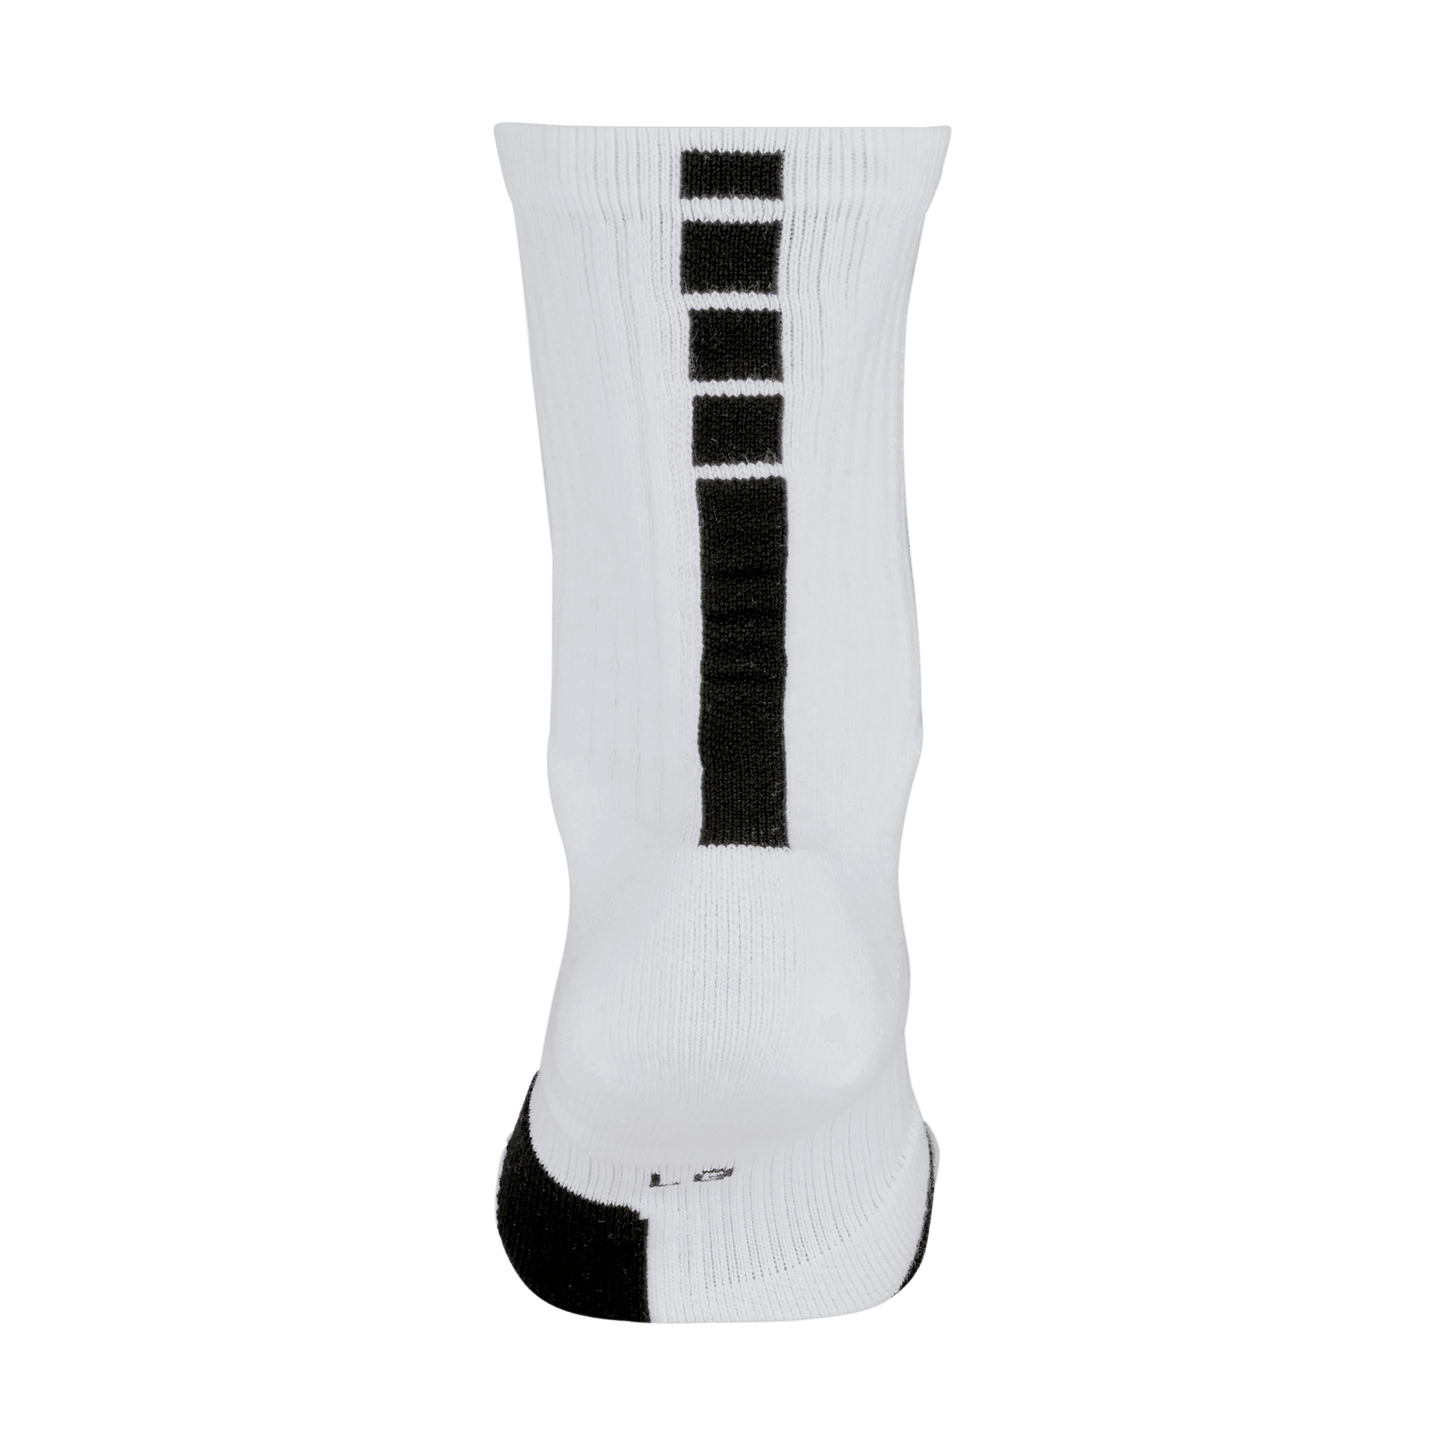 Nike Elite Crew Socks White Black